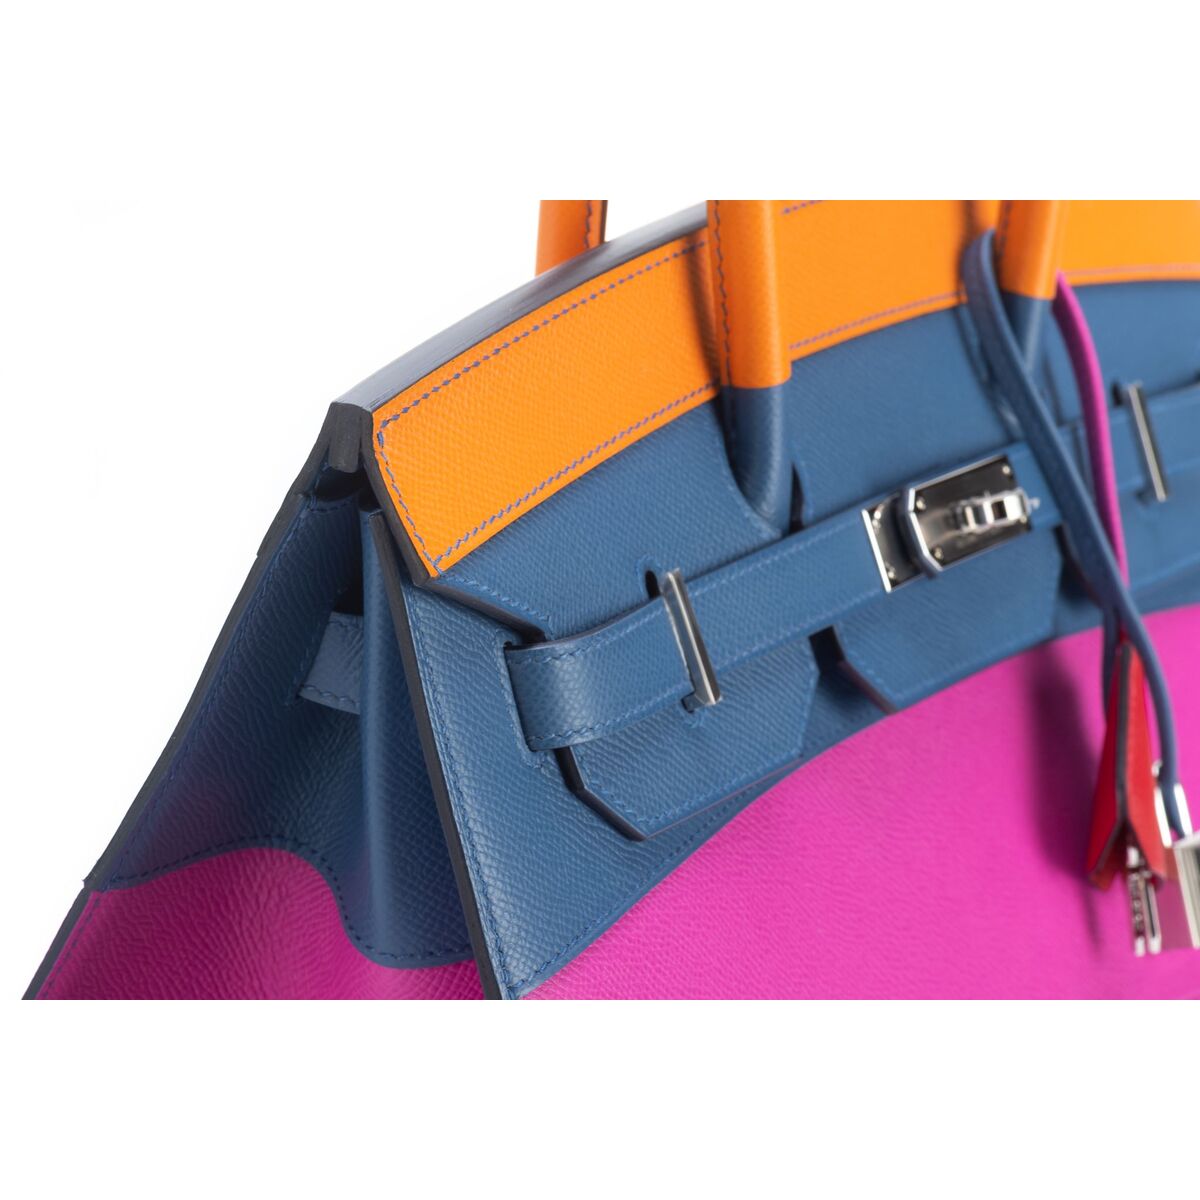 Hermès Birkin Rainbow Sunset Handbag